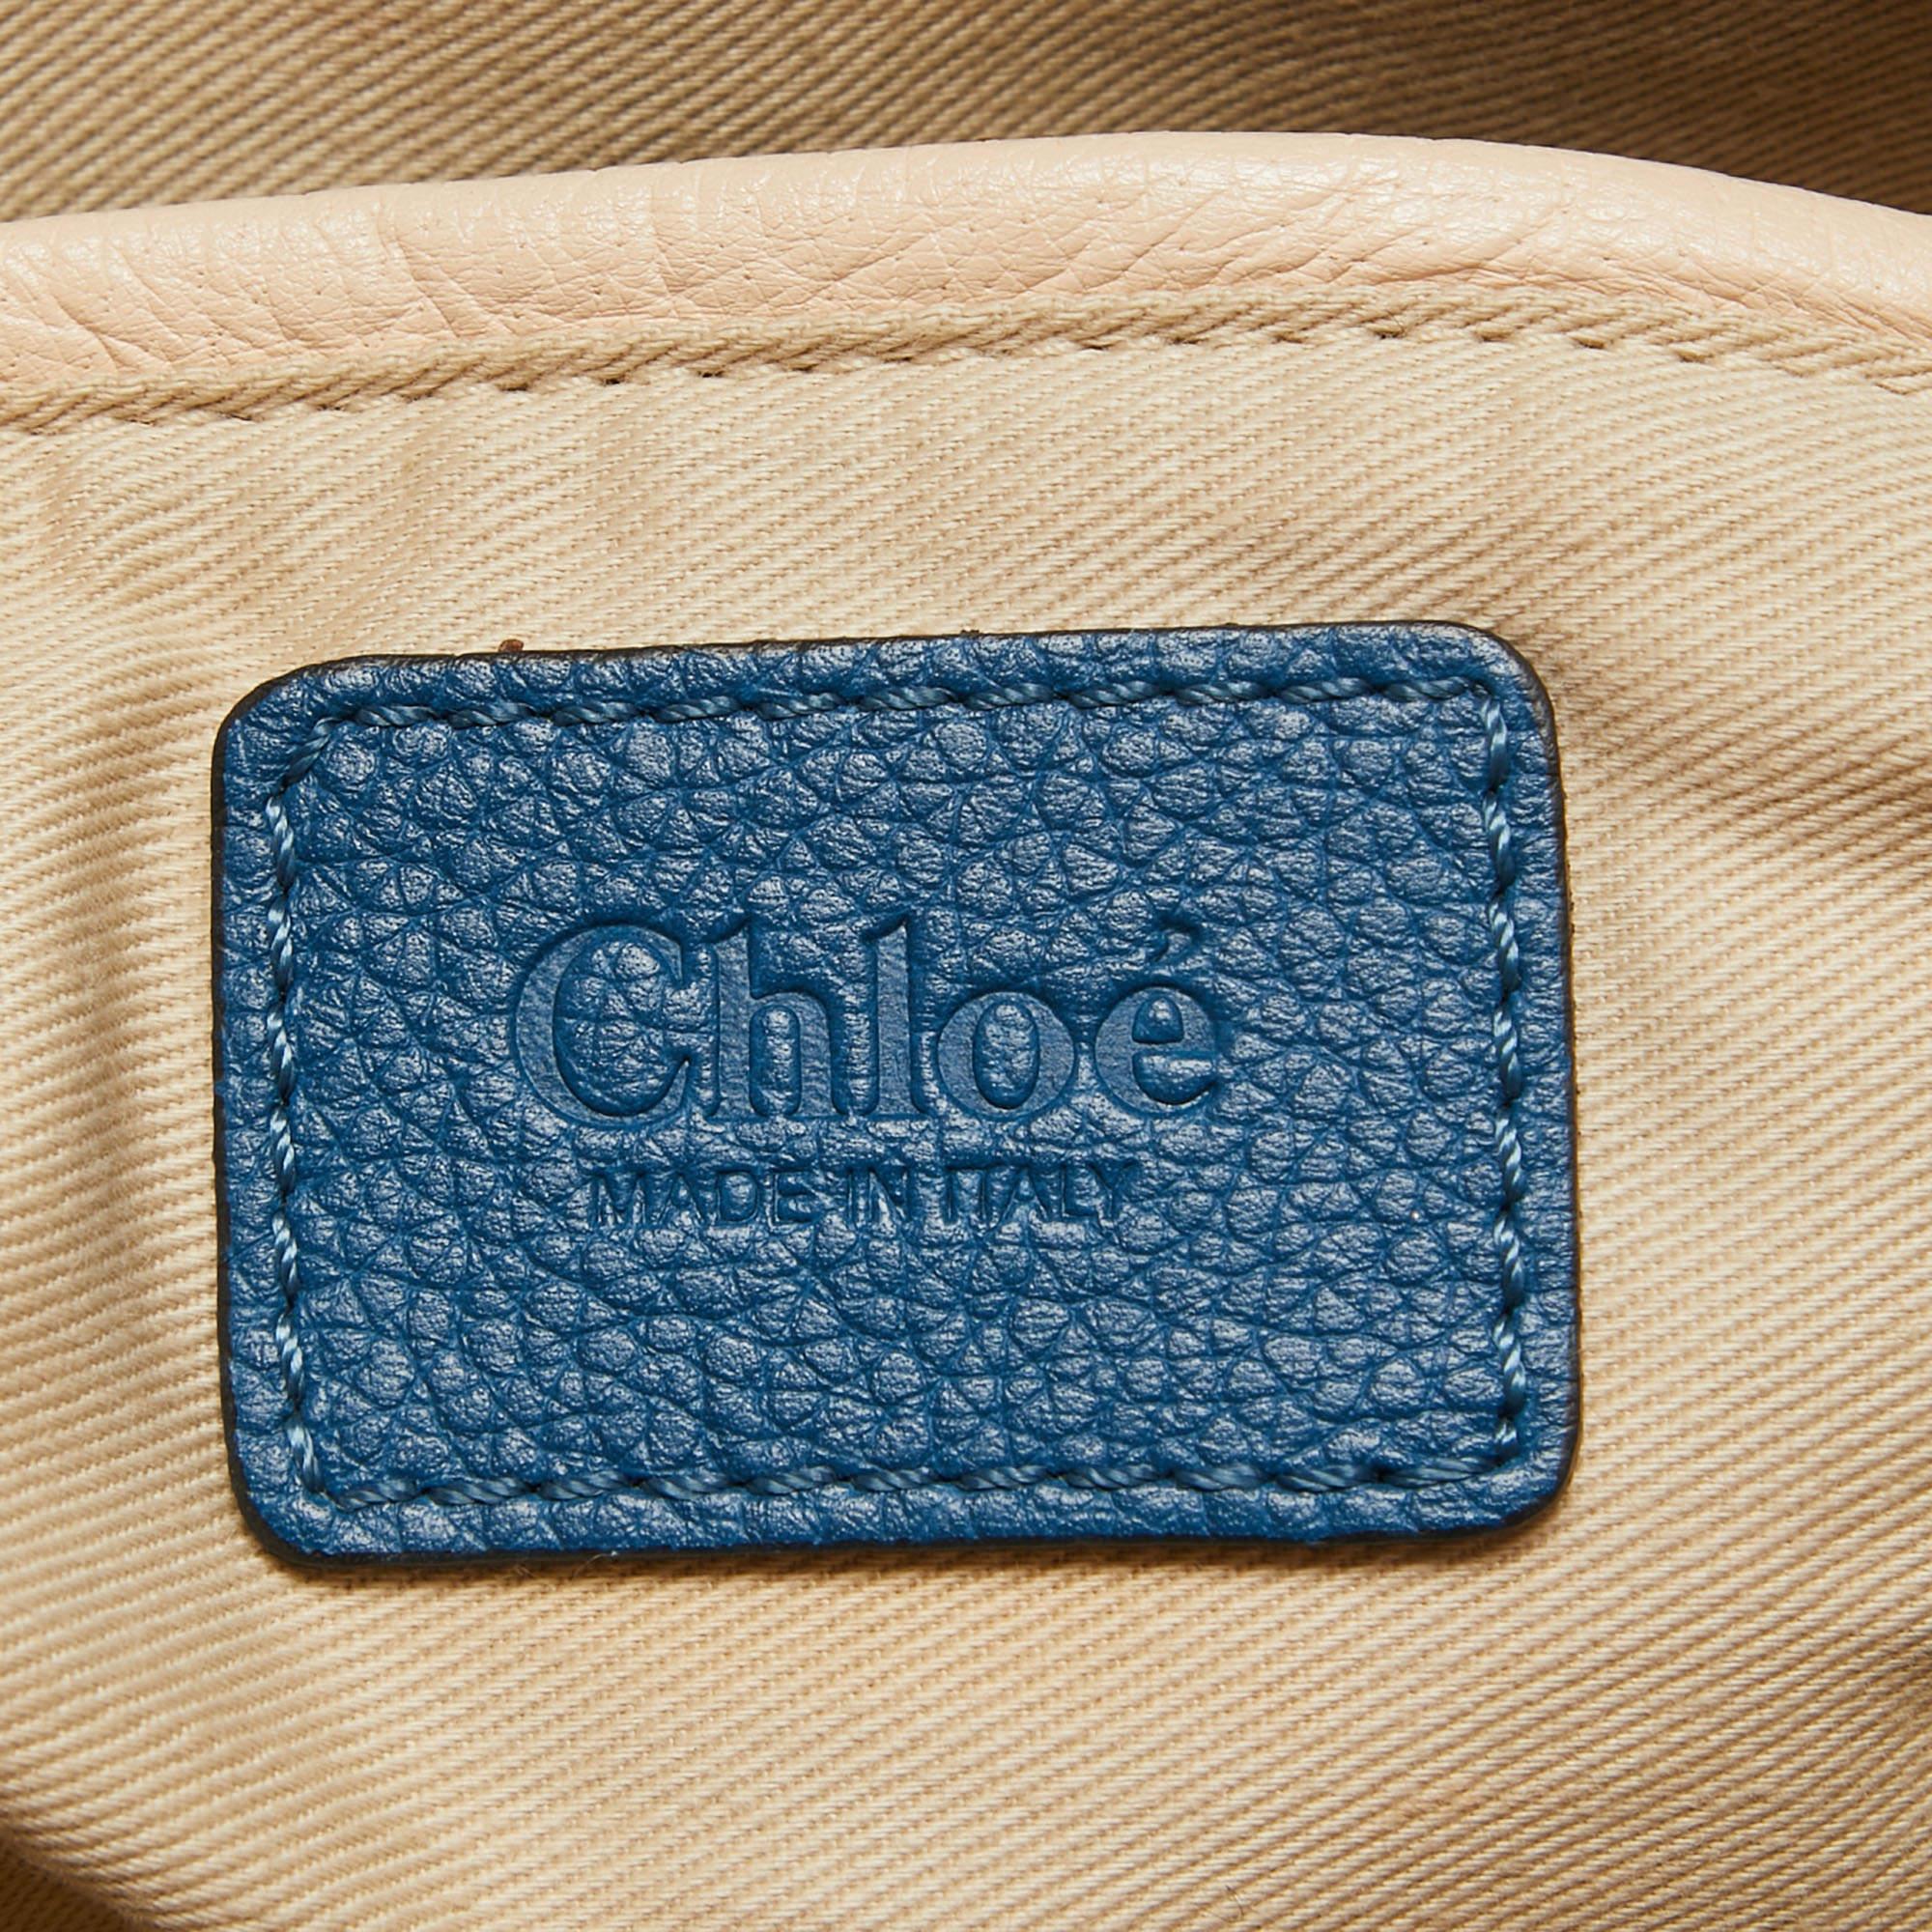 Chloe Blue Leather Medium Paraty Satchel For Sale 5